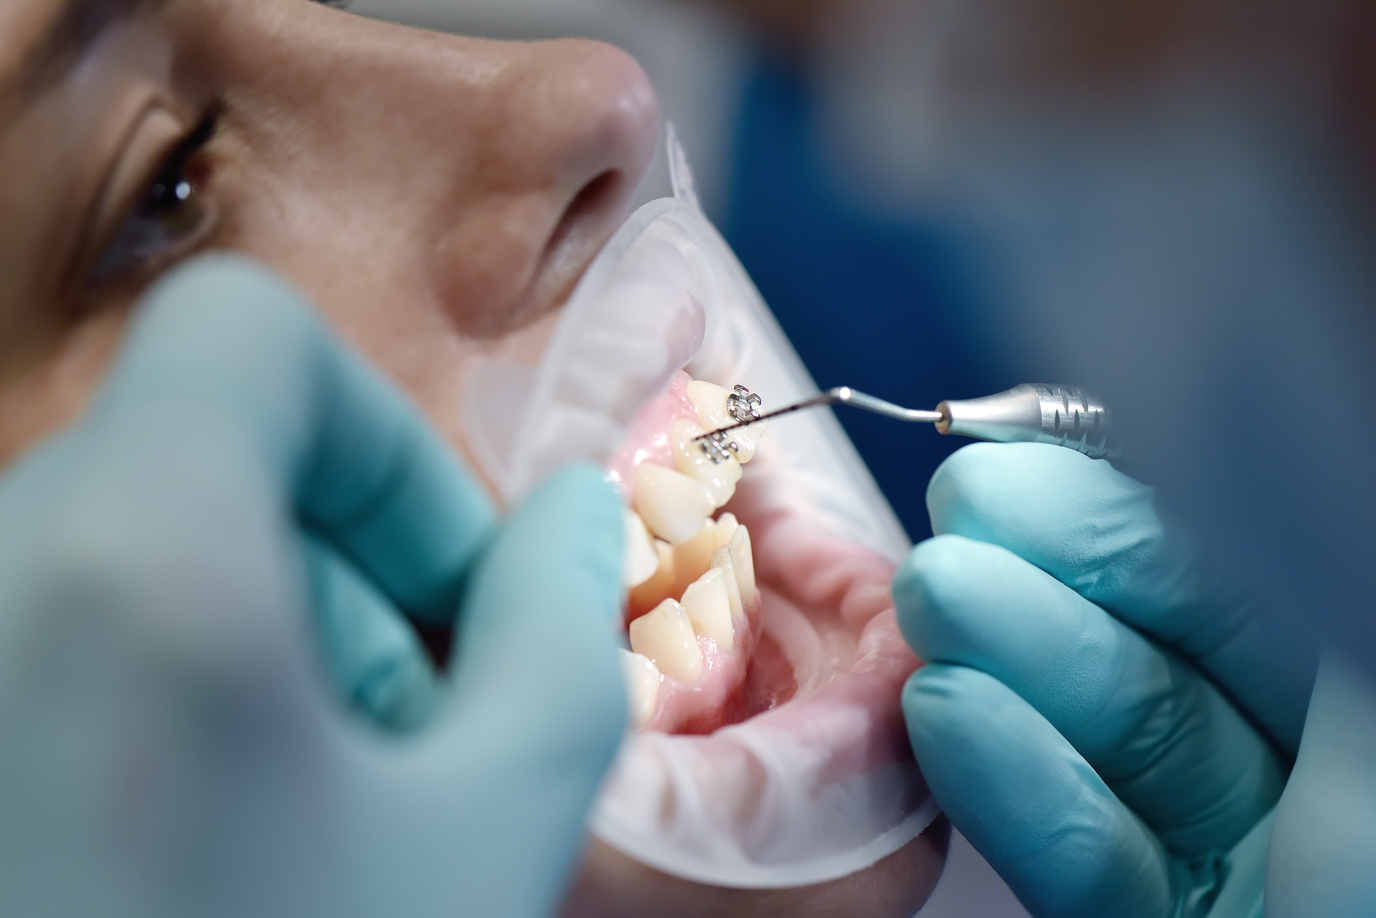 Dentist Installing Braces on Patient's Teeth